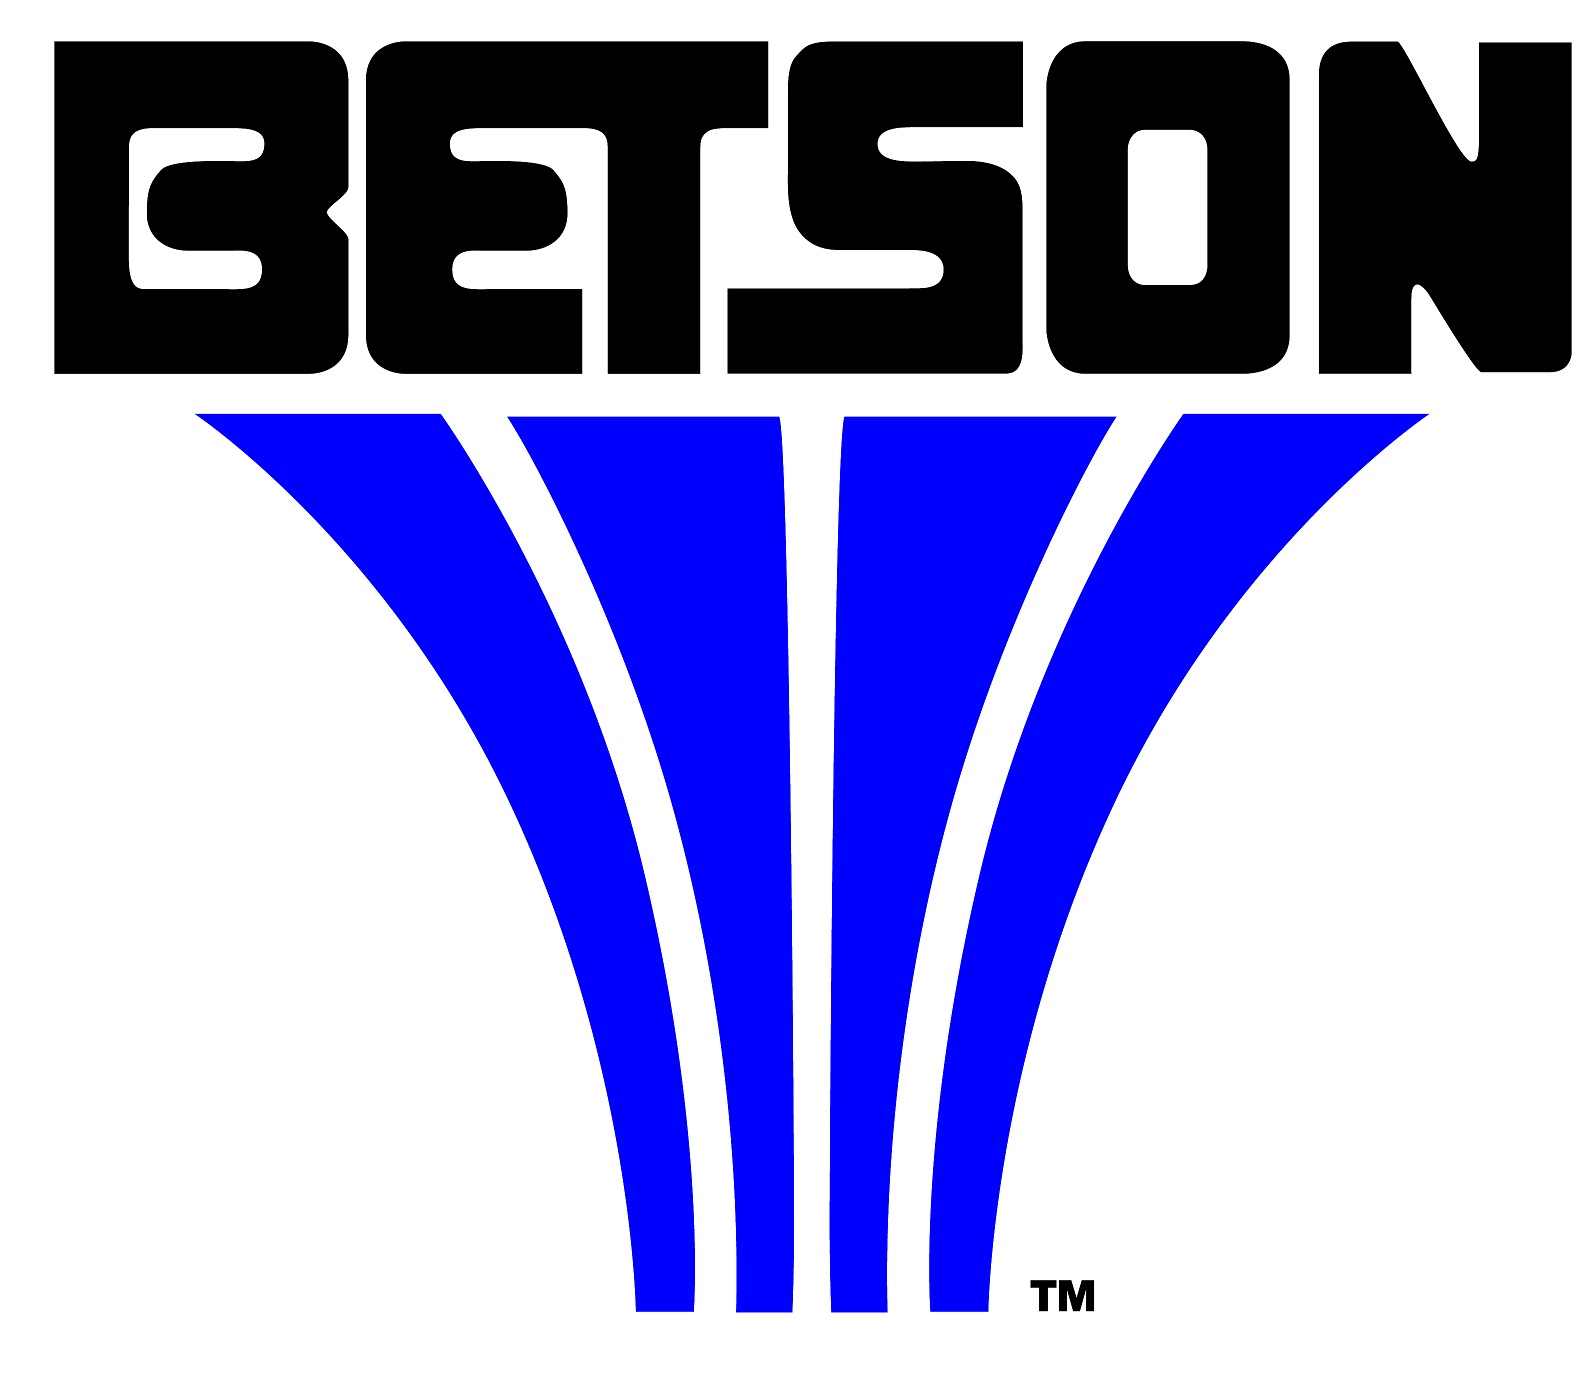 Betson West logo